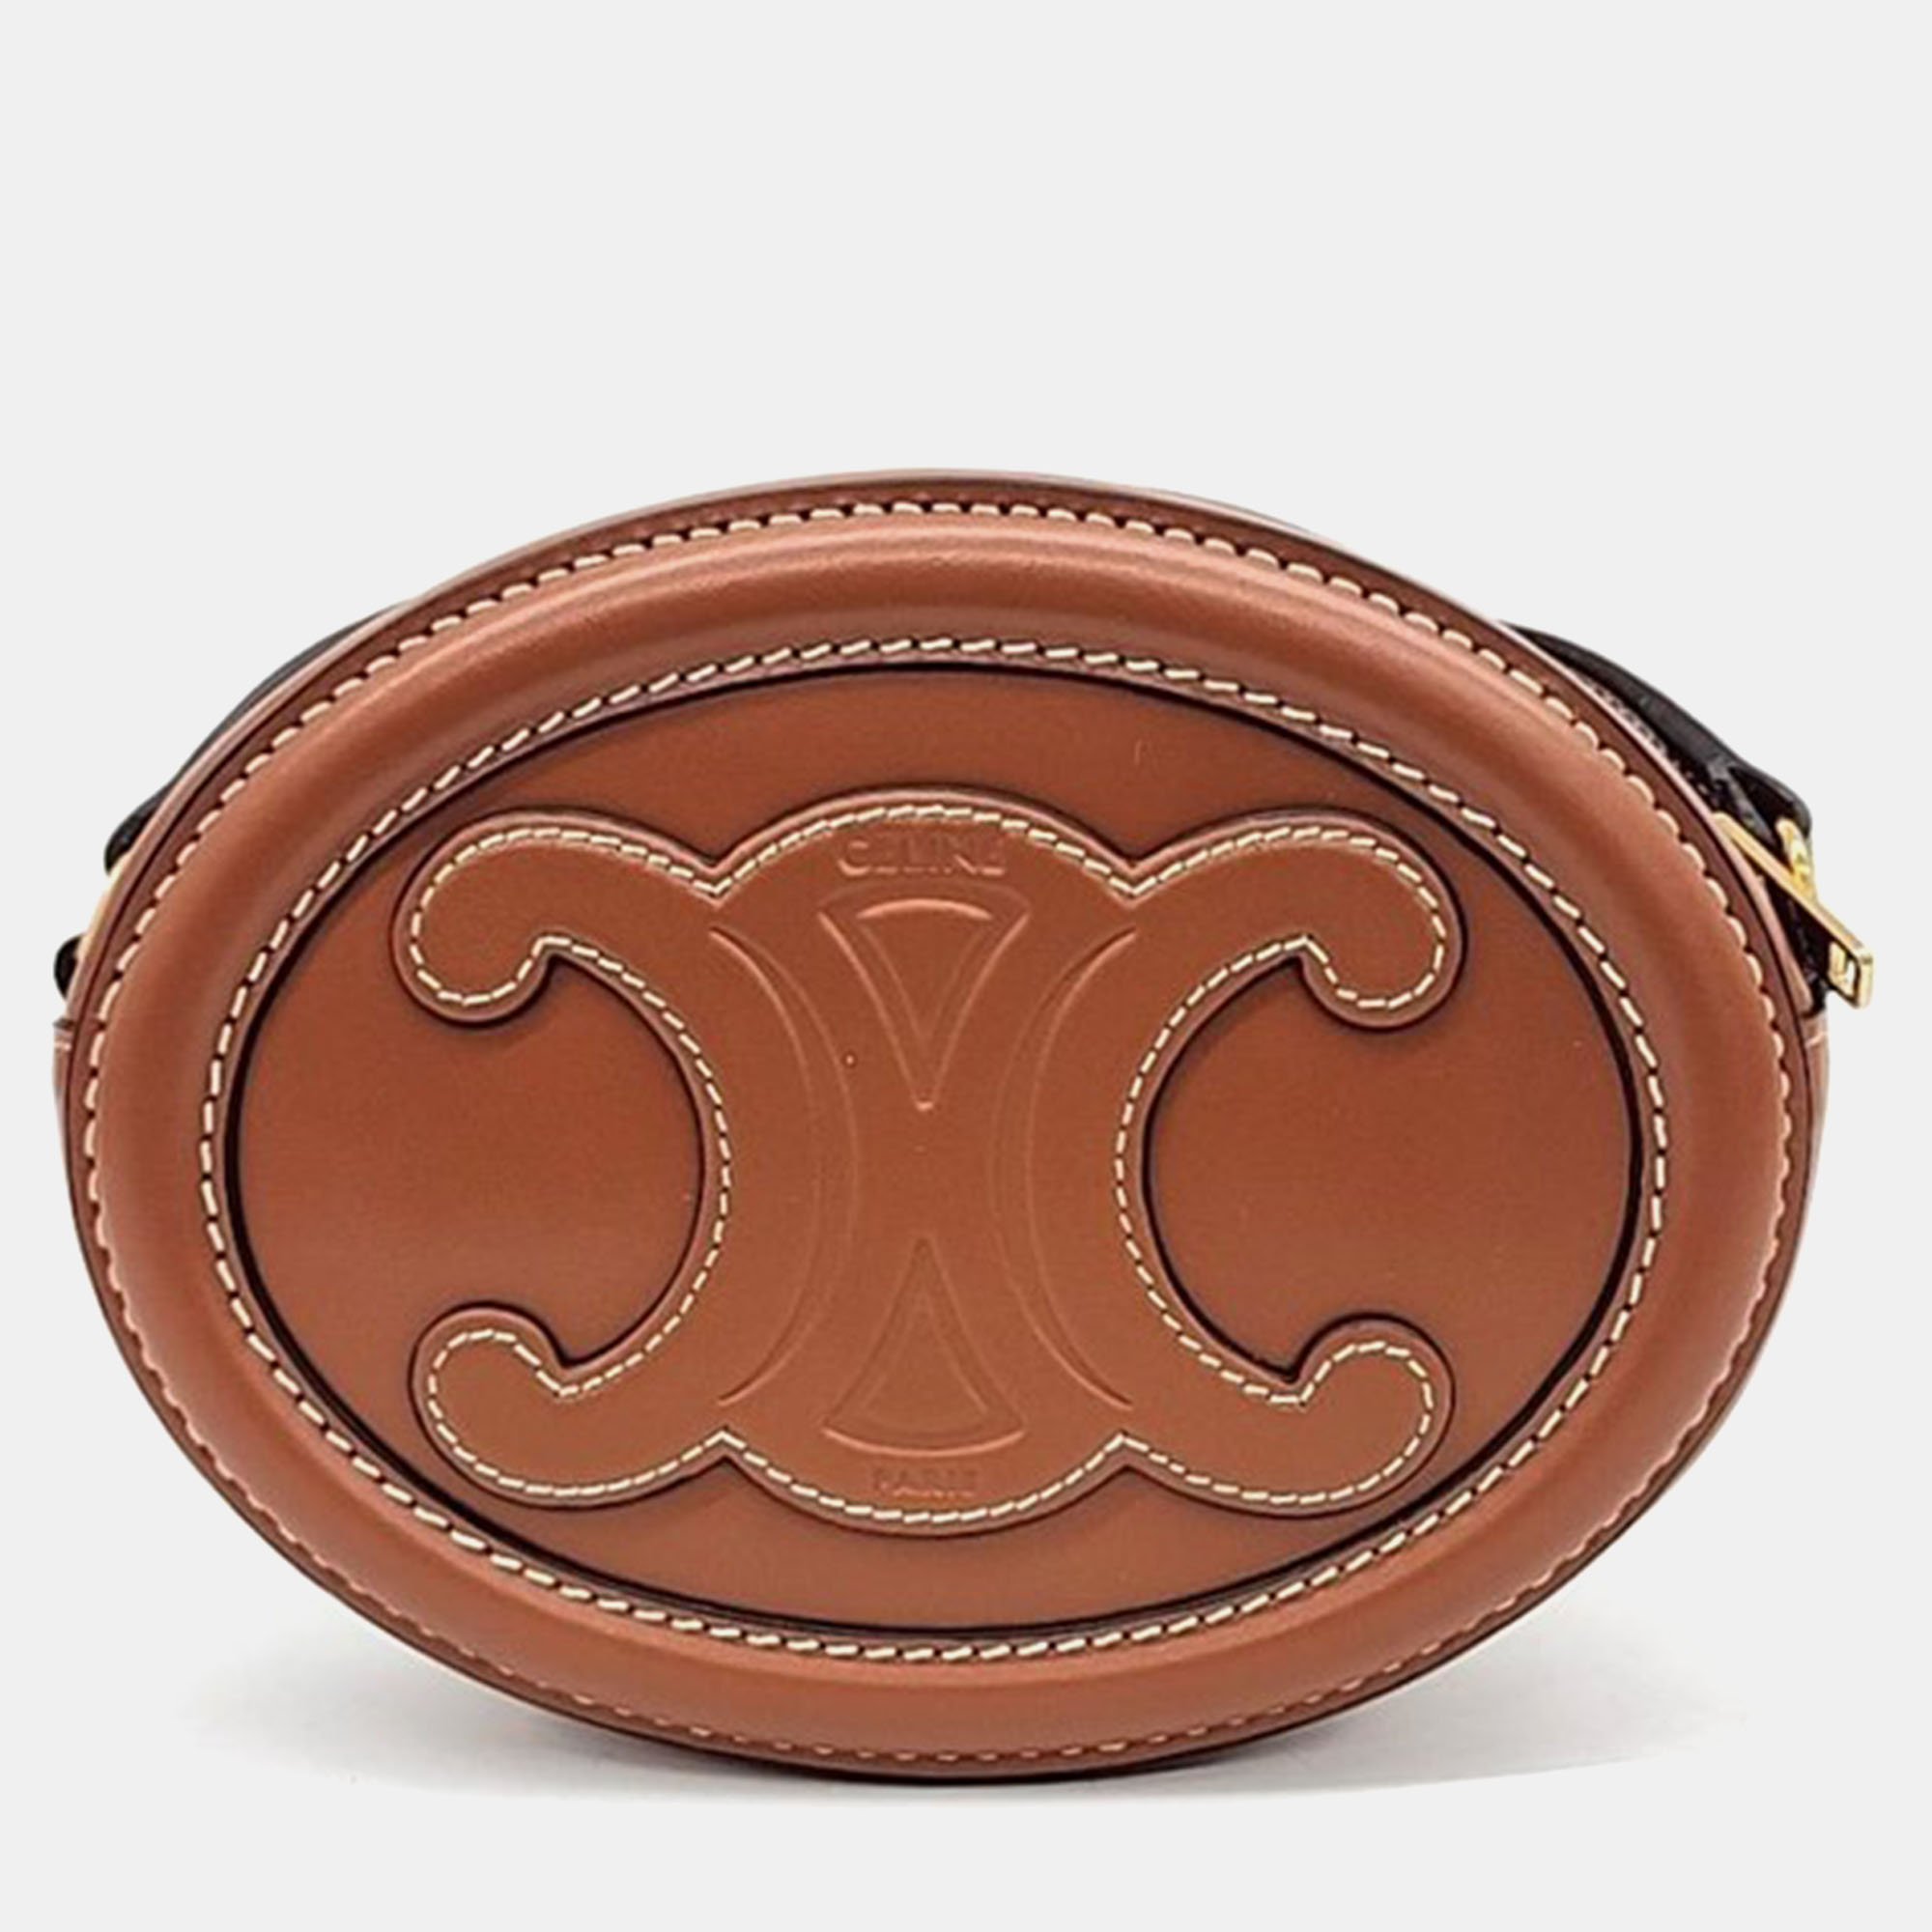 Celine brown leather oval pulse crossbody bag